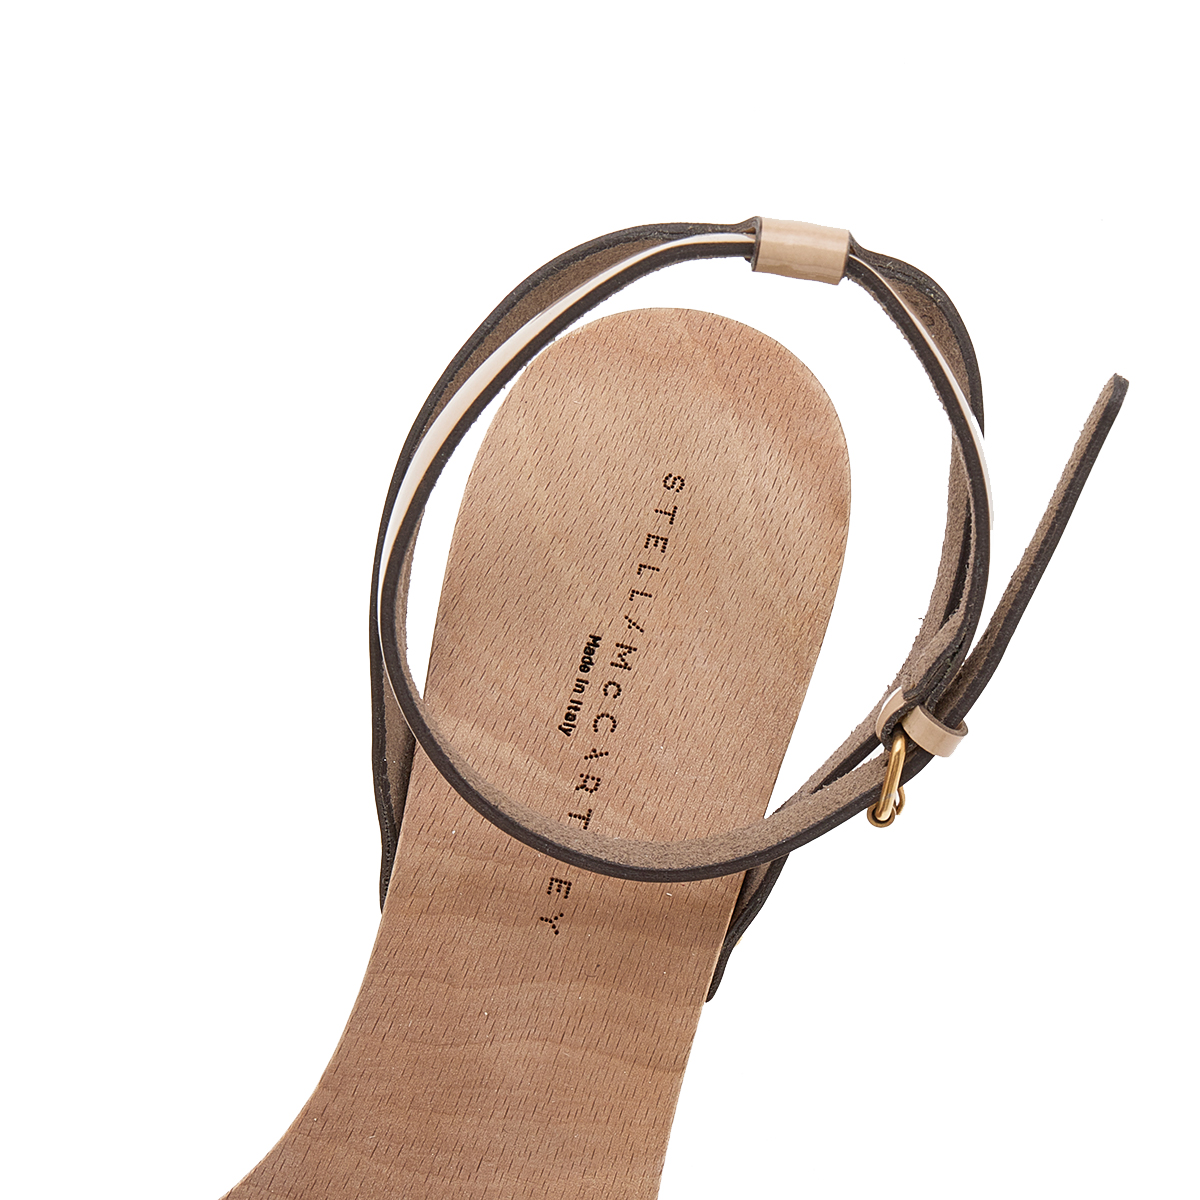 Stella McCartney Beige Faux Patent Leather Linda Wedge Sandals Size 40